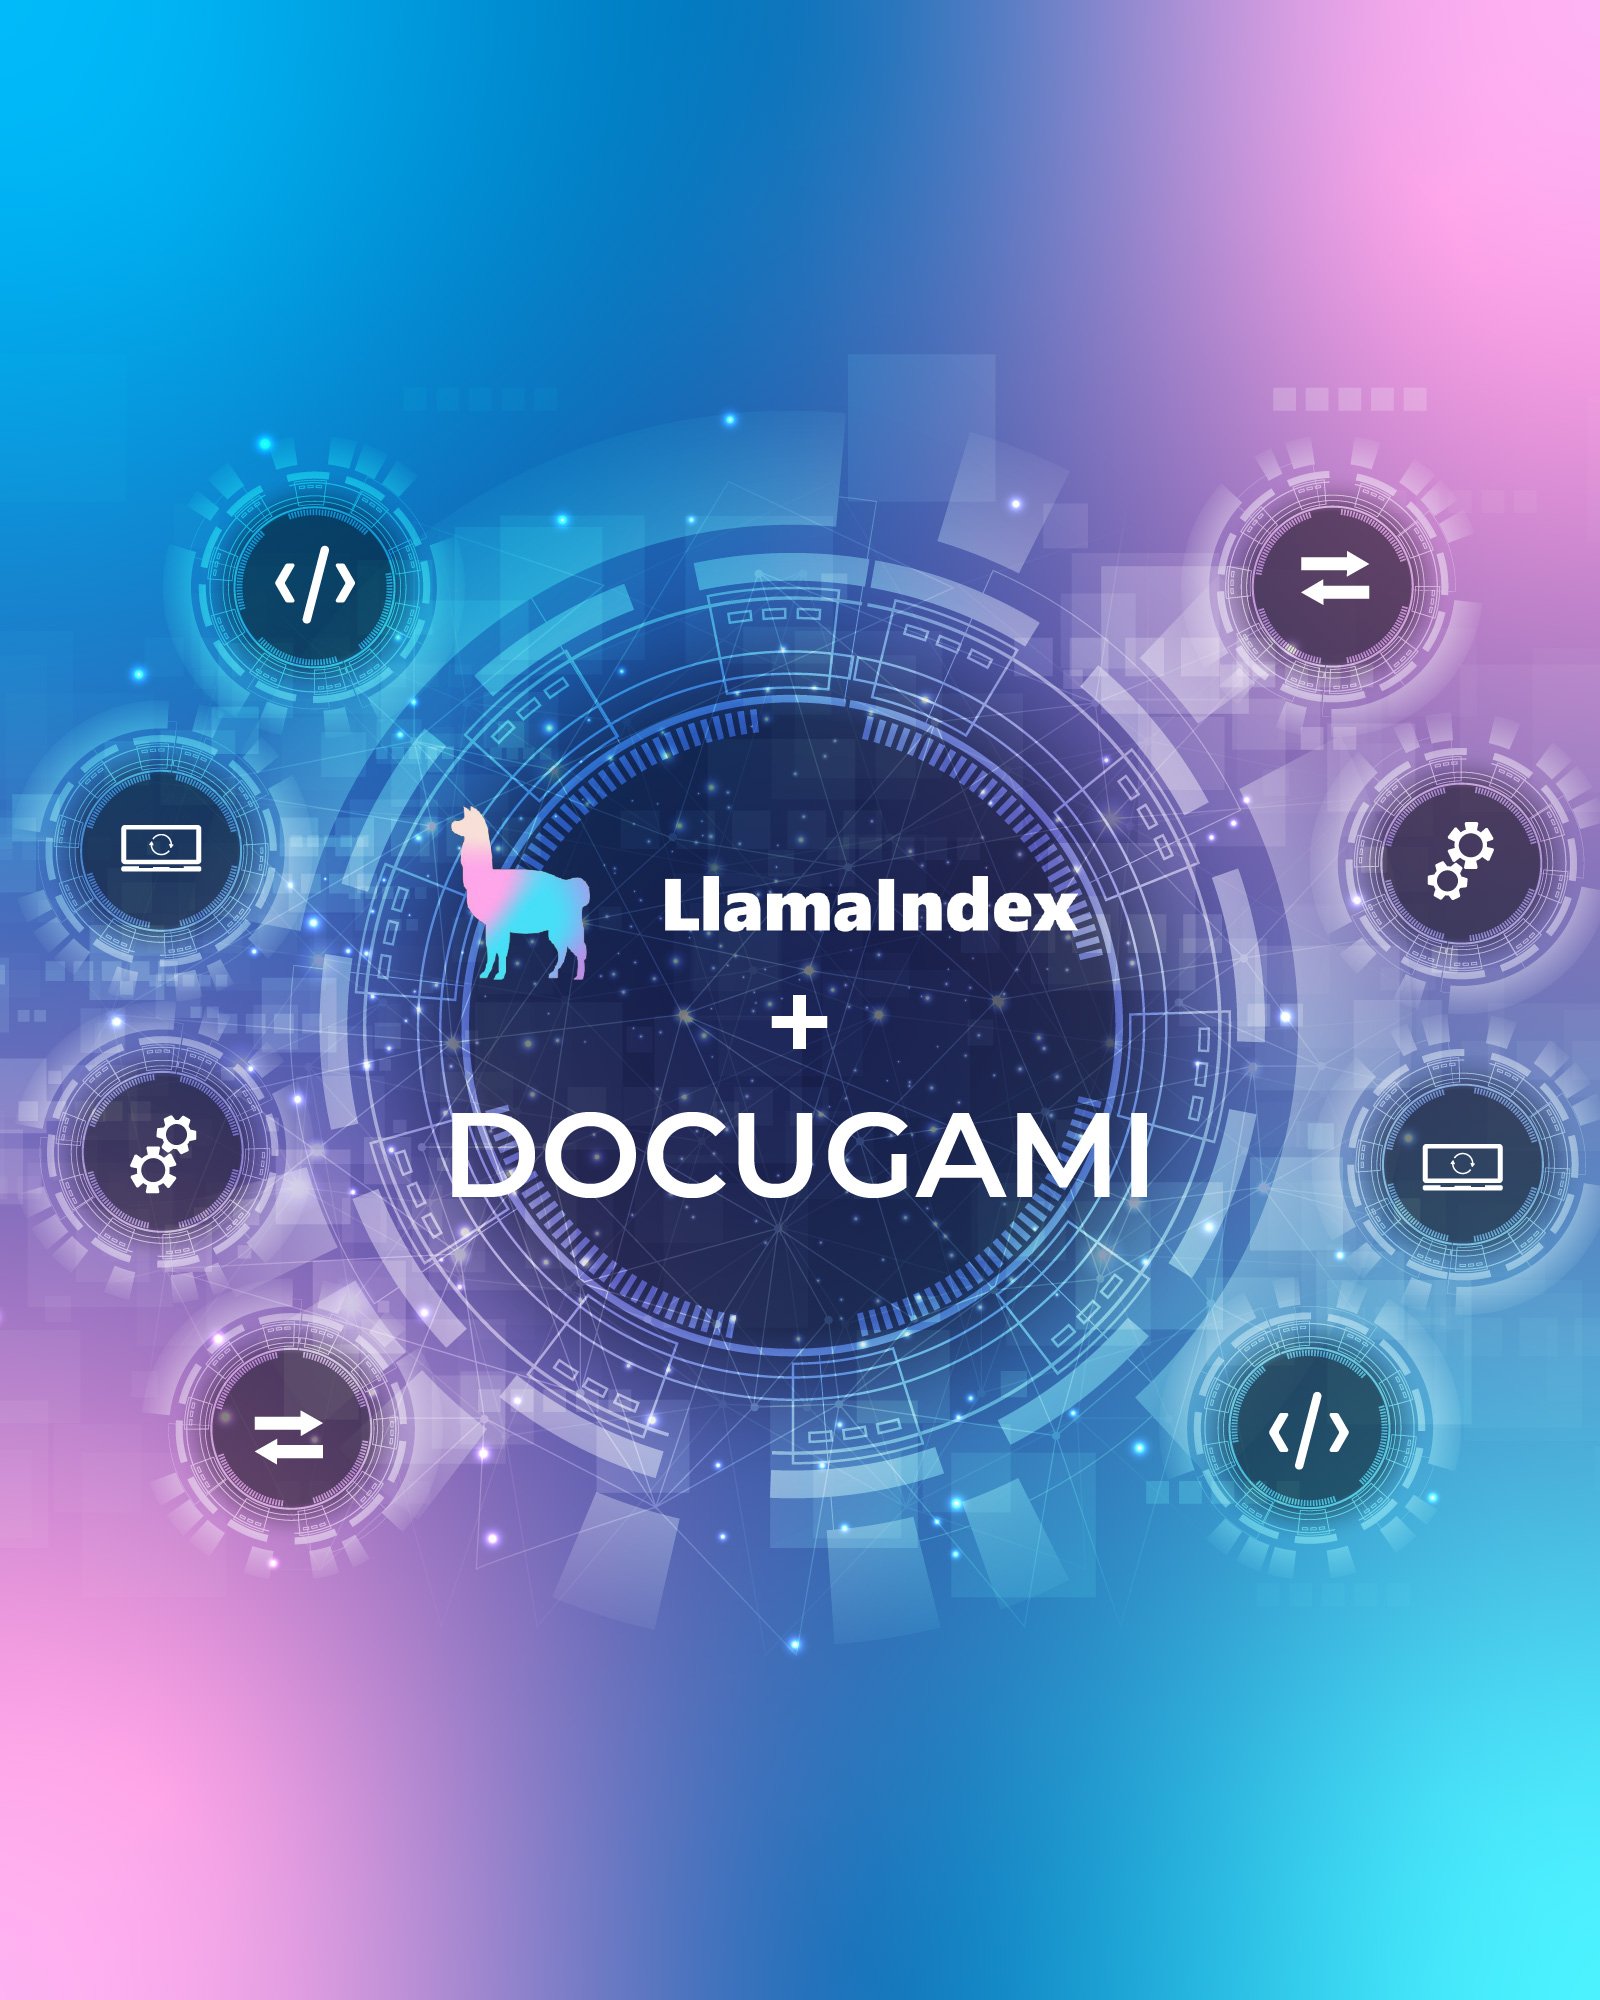 LlamaIndex Docugami image